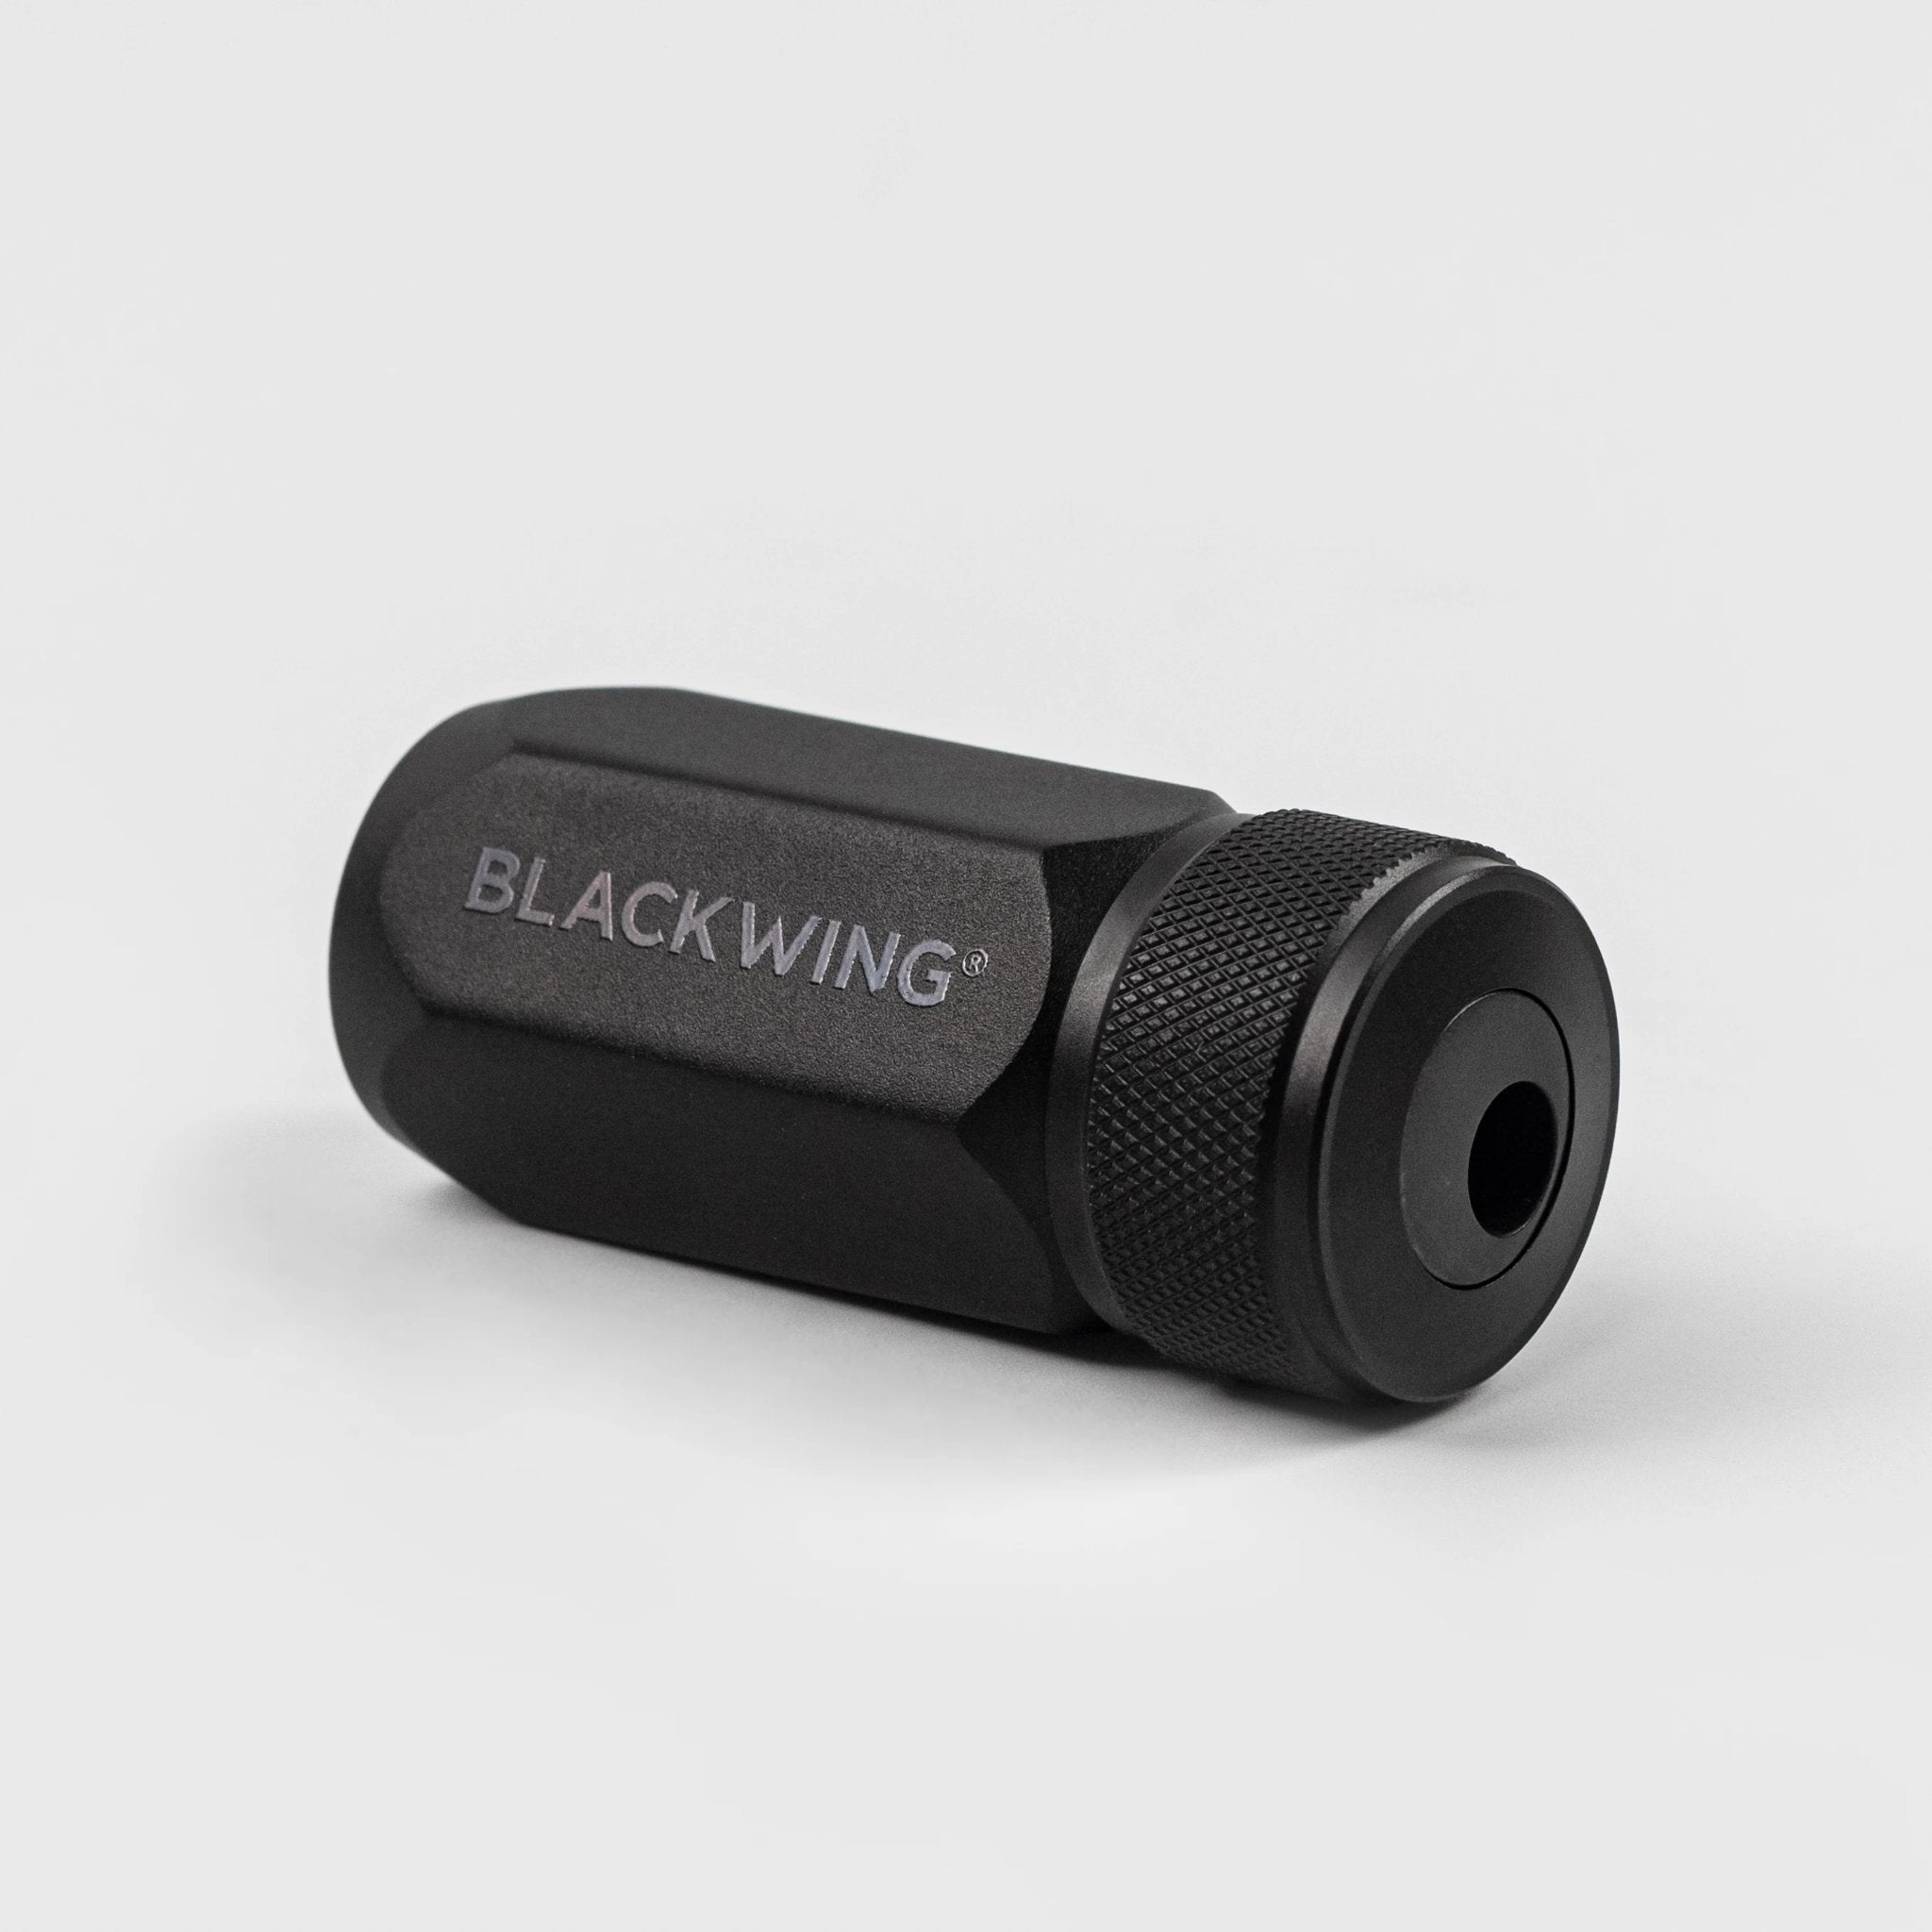 Blackwing 1-Step Long Point Sharpener